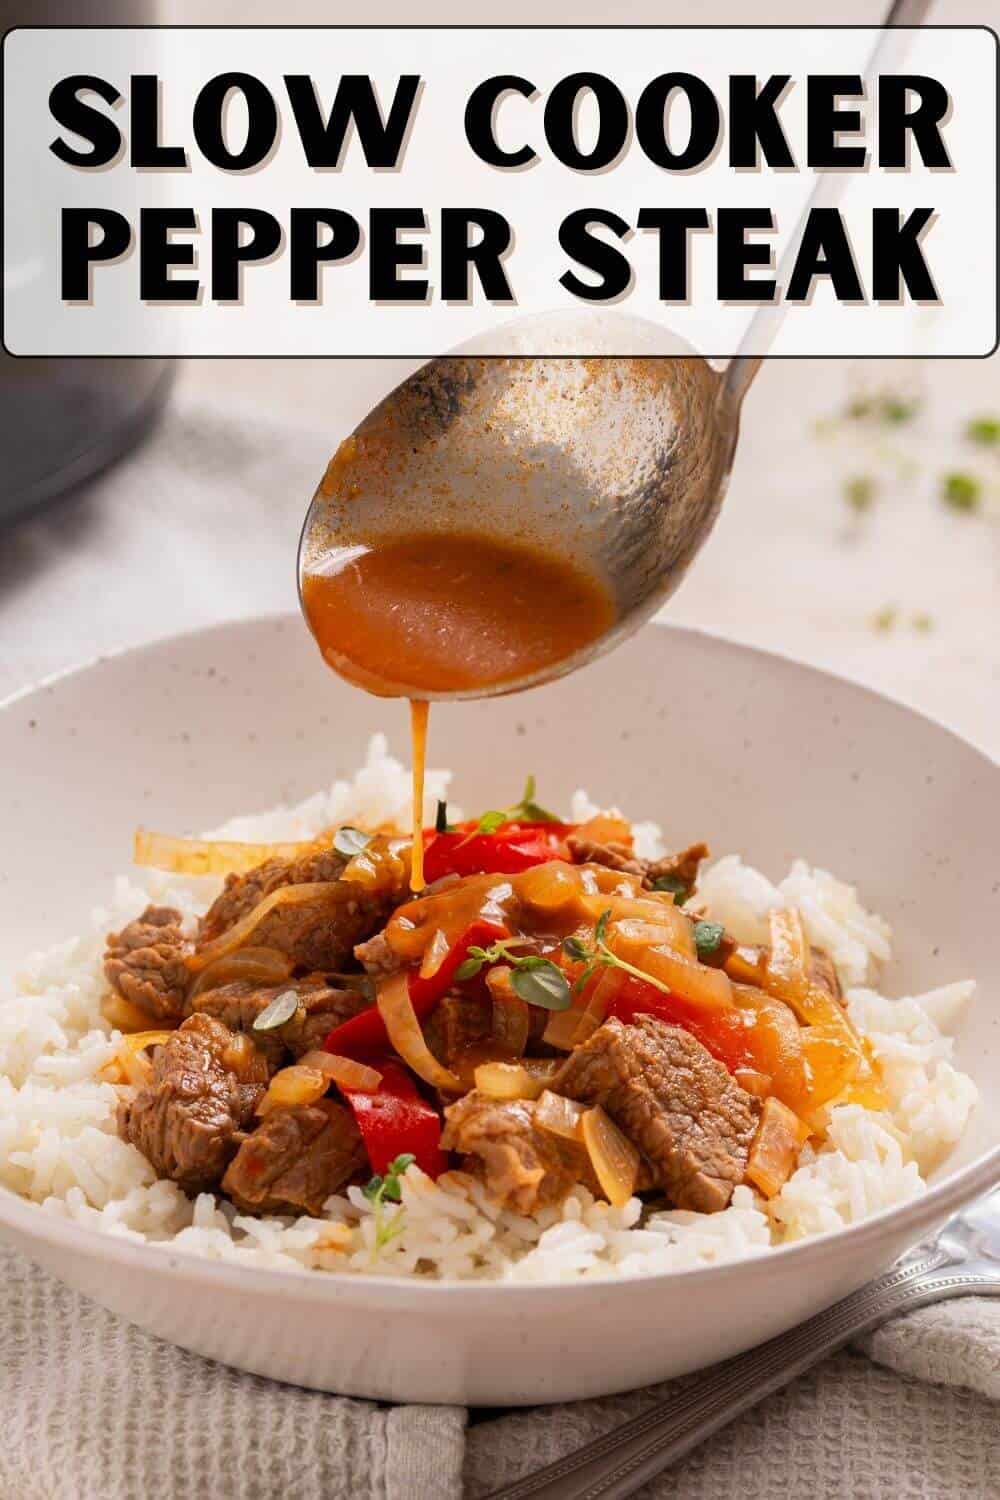 Slow cooker pepper steak.